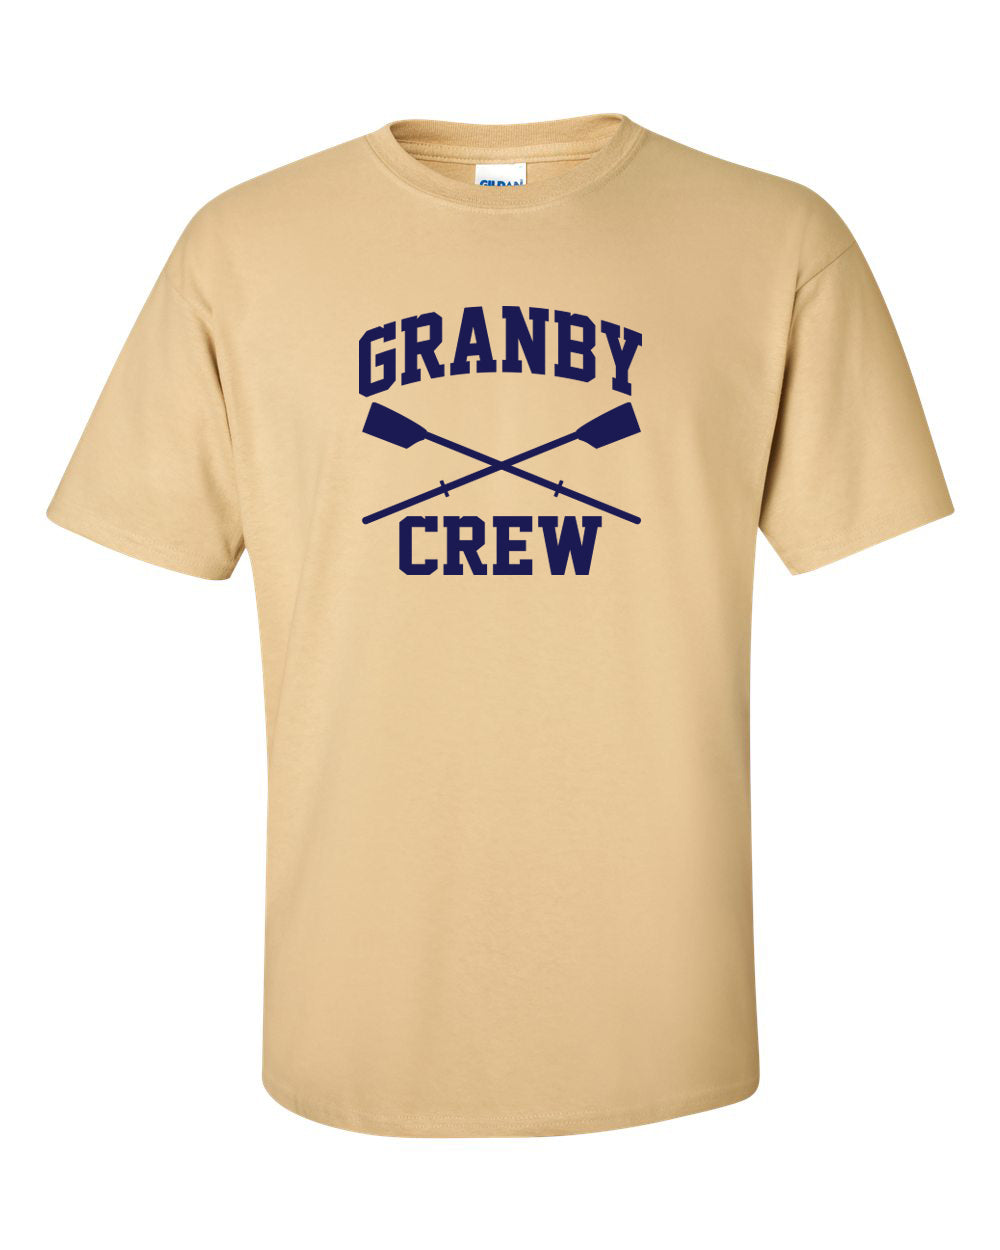 100% Cotton Granby Crew Men's Team Spirit T-Shirt